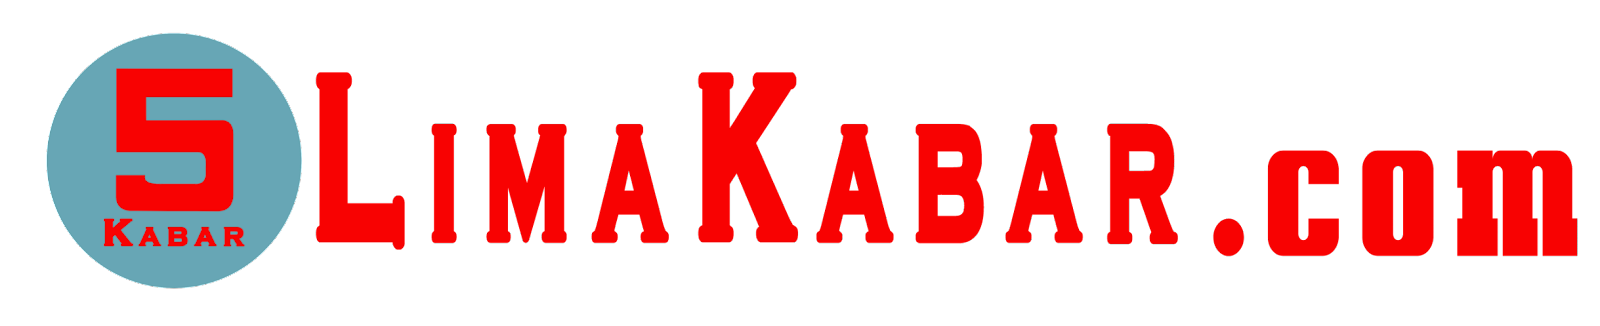 LimaKabar.com